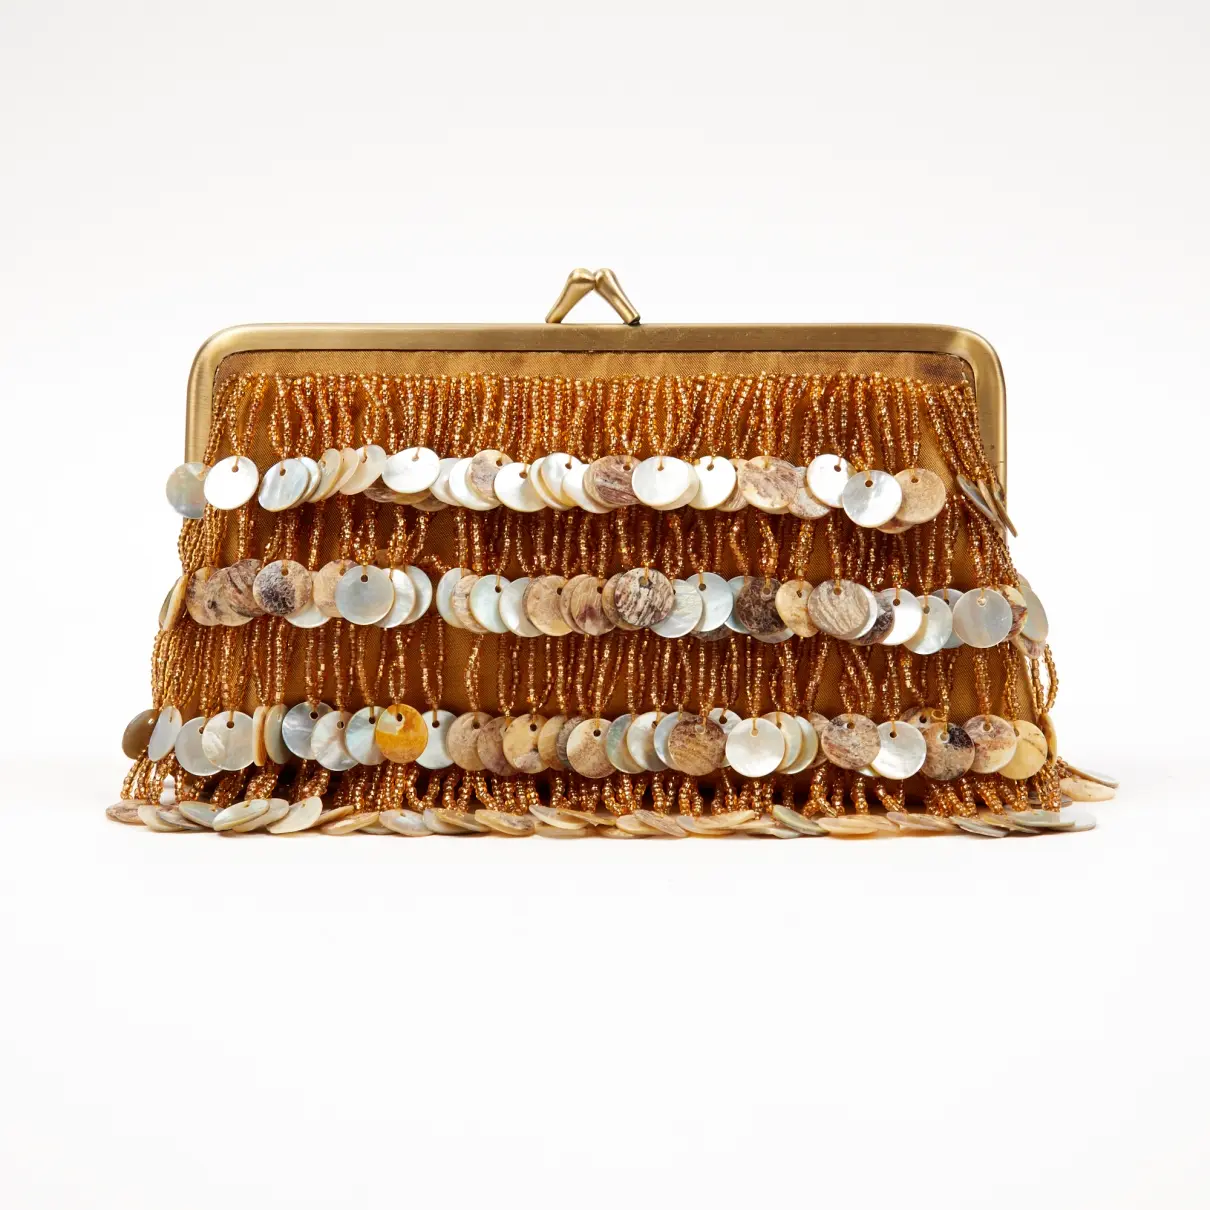 Buy Sarah's Bag Clutch bag online